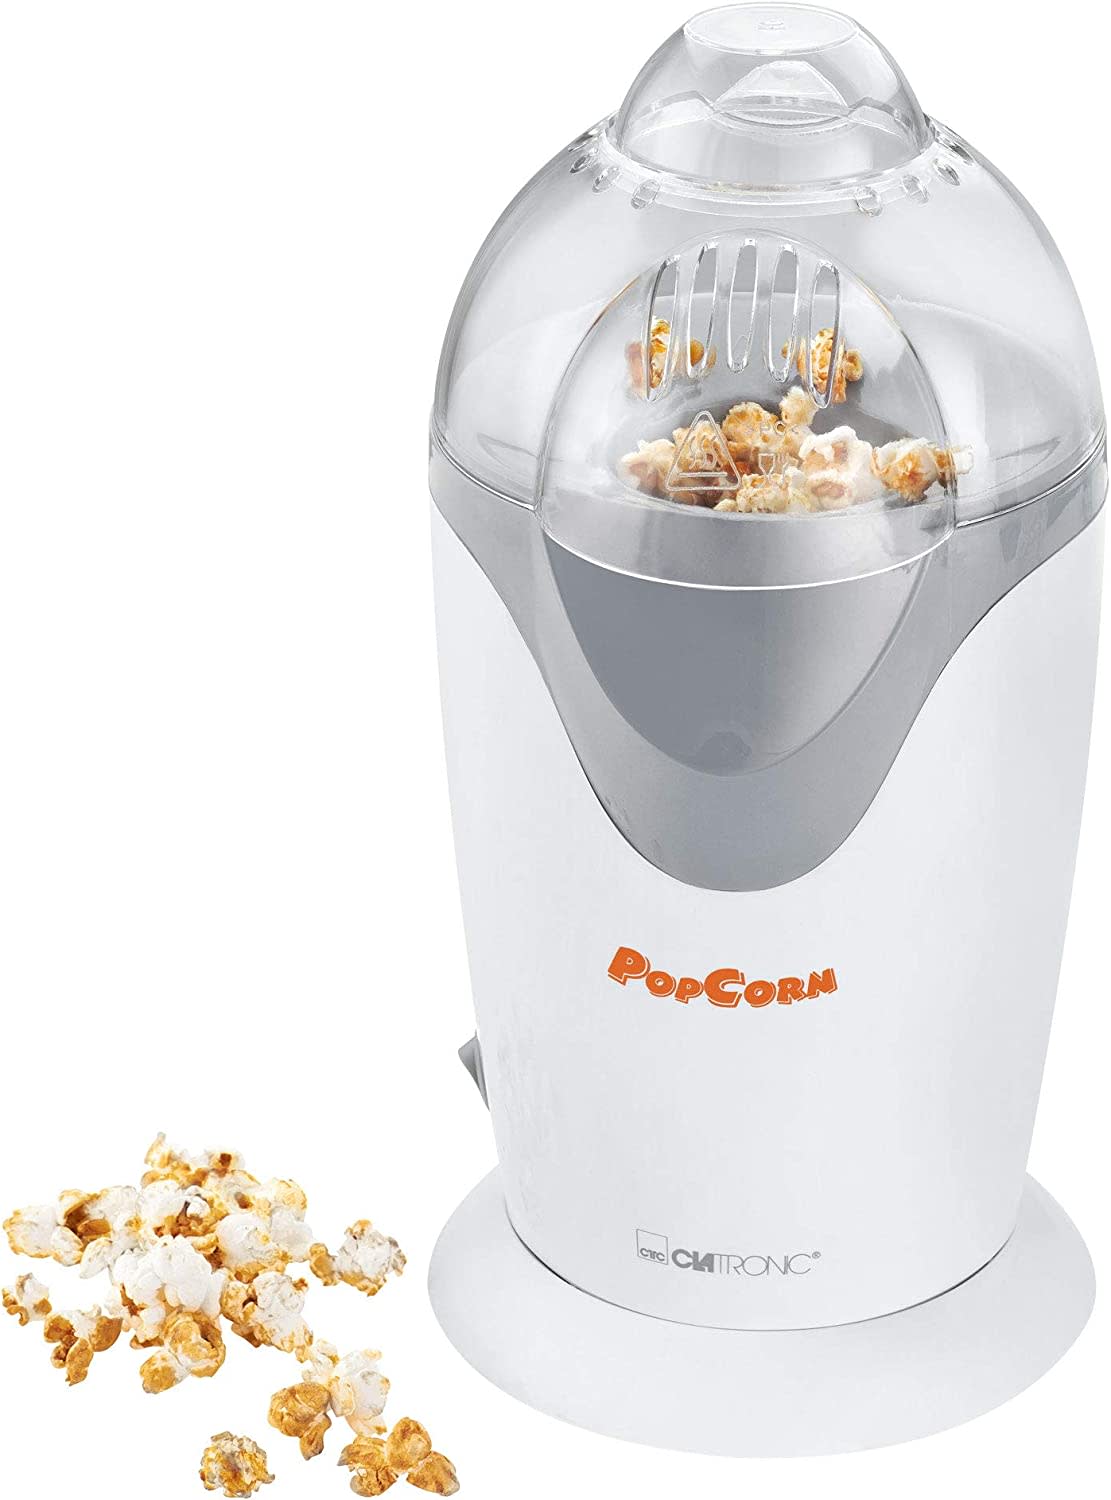 Clatronic PM 3635 Electric Popcorn Maker